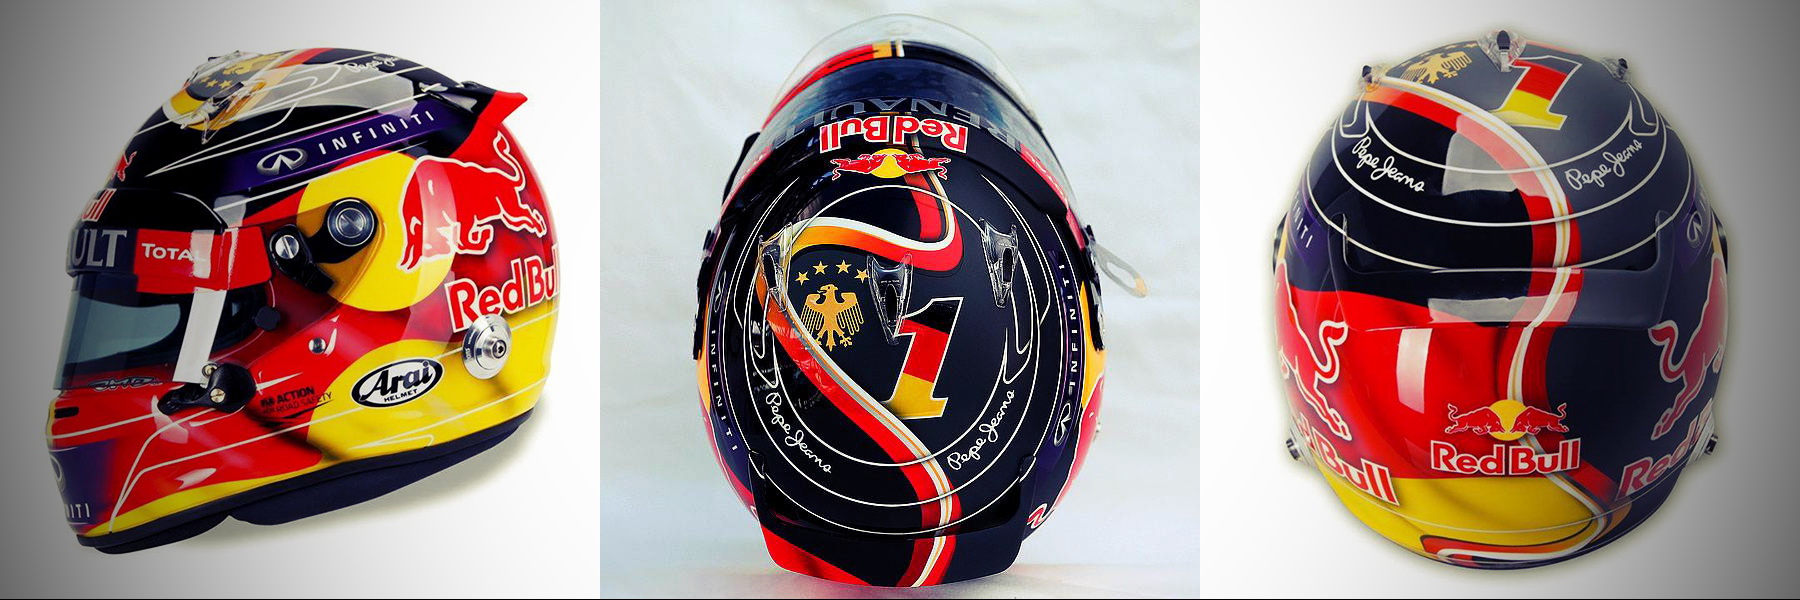 Шлем Себастьяна Феттеля на Гран-При Германии 2014 | 2014 German Grand Prix helmet of Sebastian Vettel